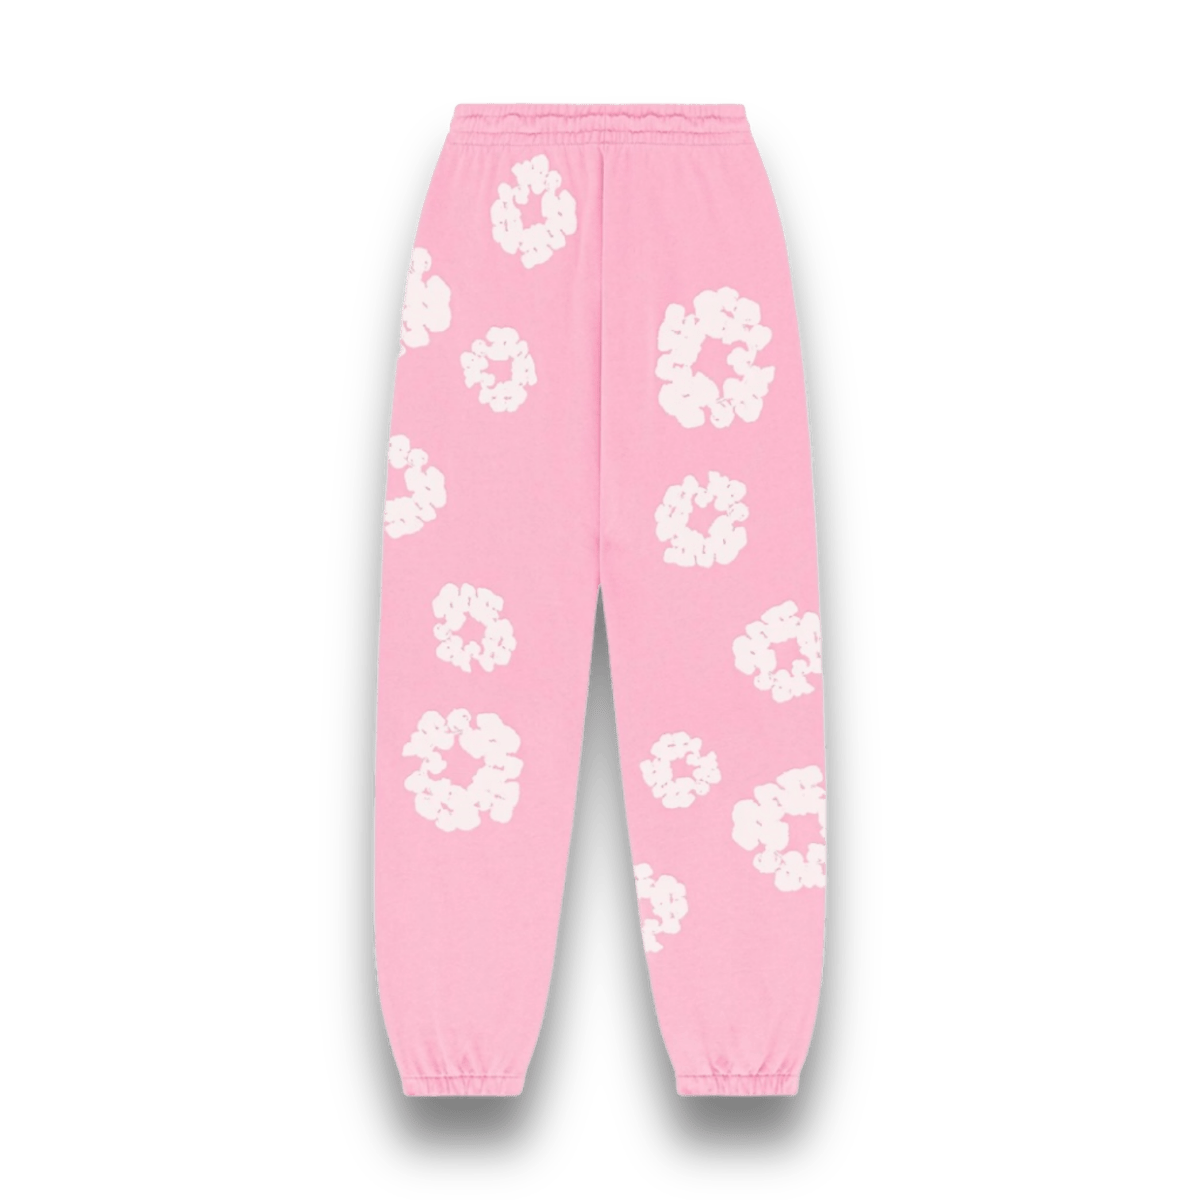 Denim Tears the Cotton Wreath Pink Sweatpants - Clothing - Jawns on Fire Sneakers & Streetwear